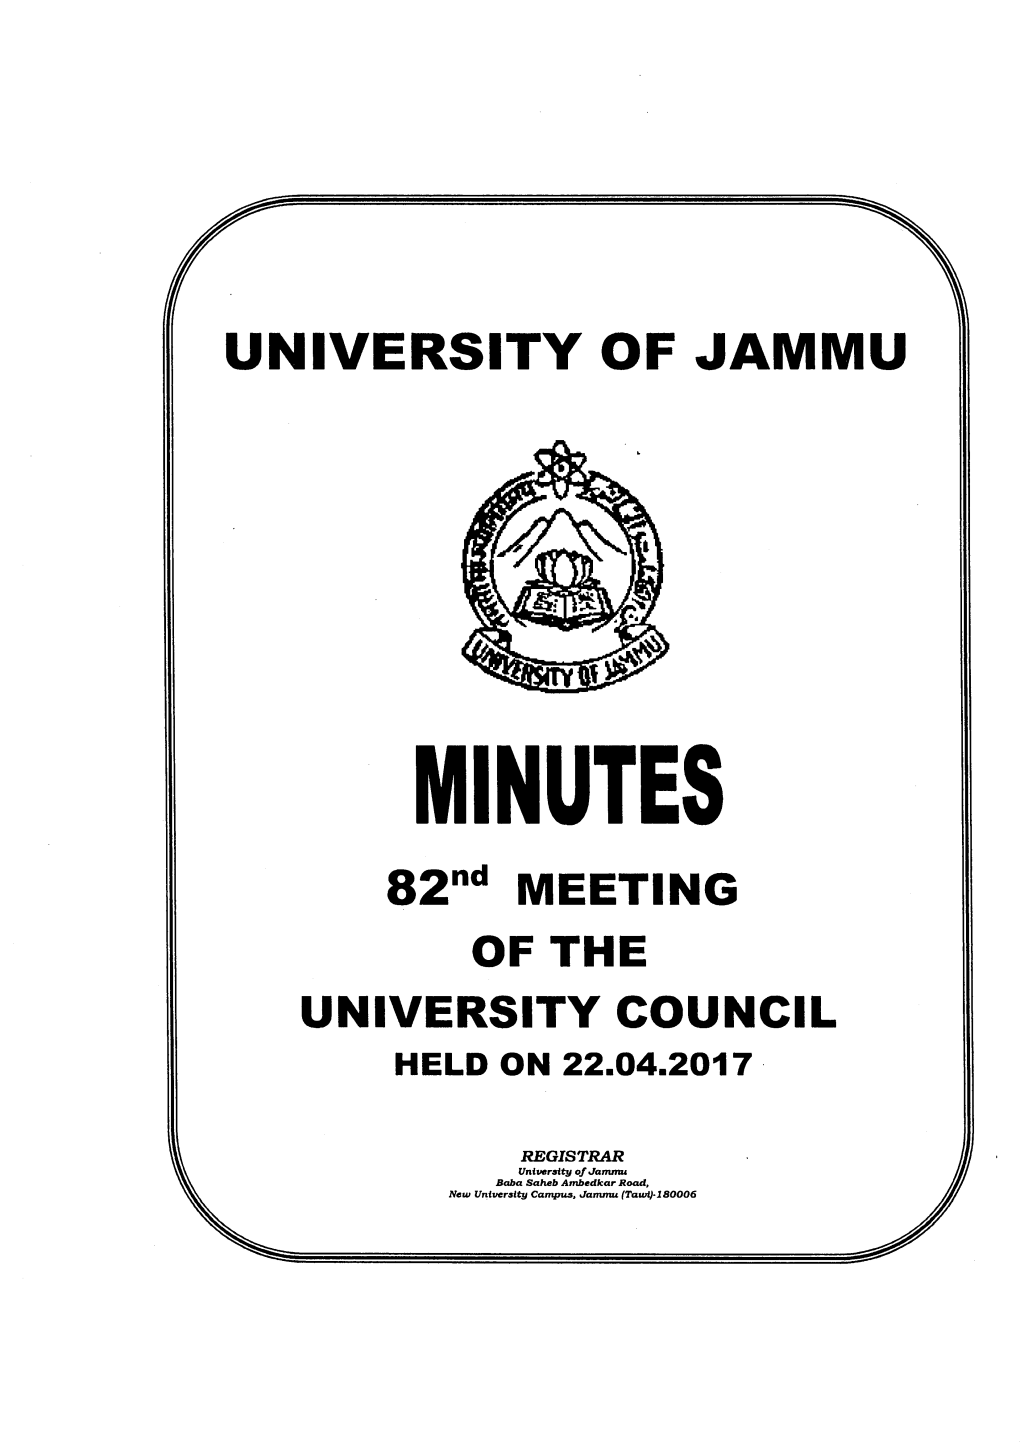 Mil{UTES 82"D MEETING of the UNIVERSITY GOUNGIL HELD on 22.04.2(J17